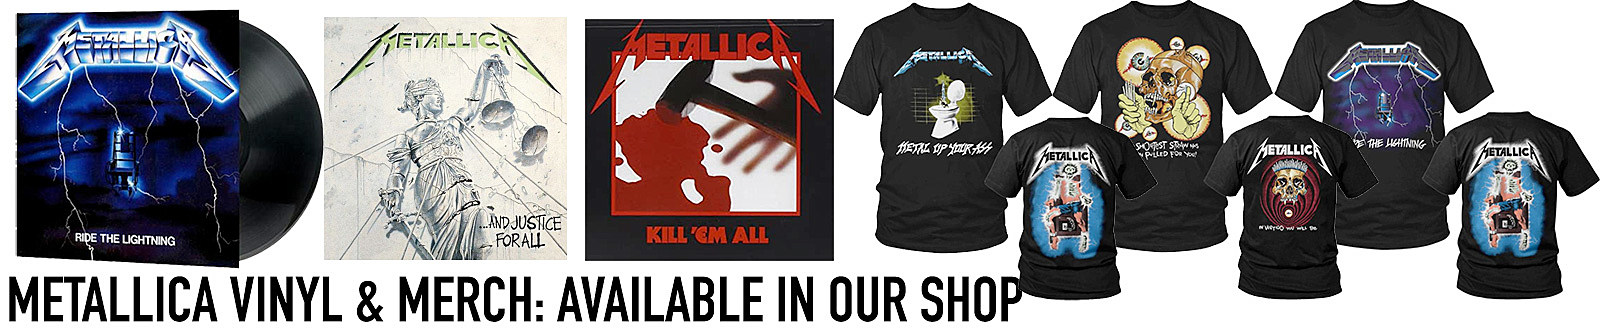 Metallica ad